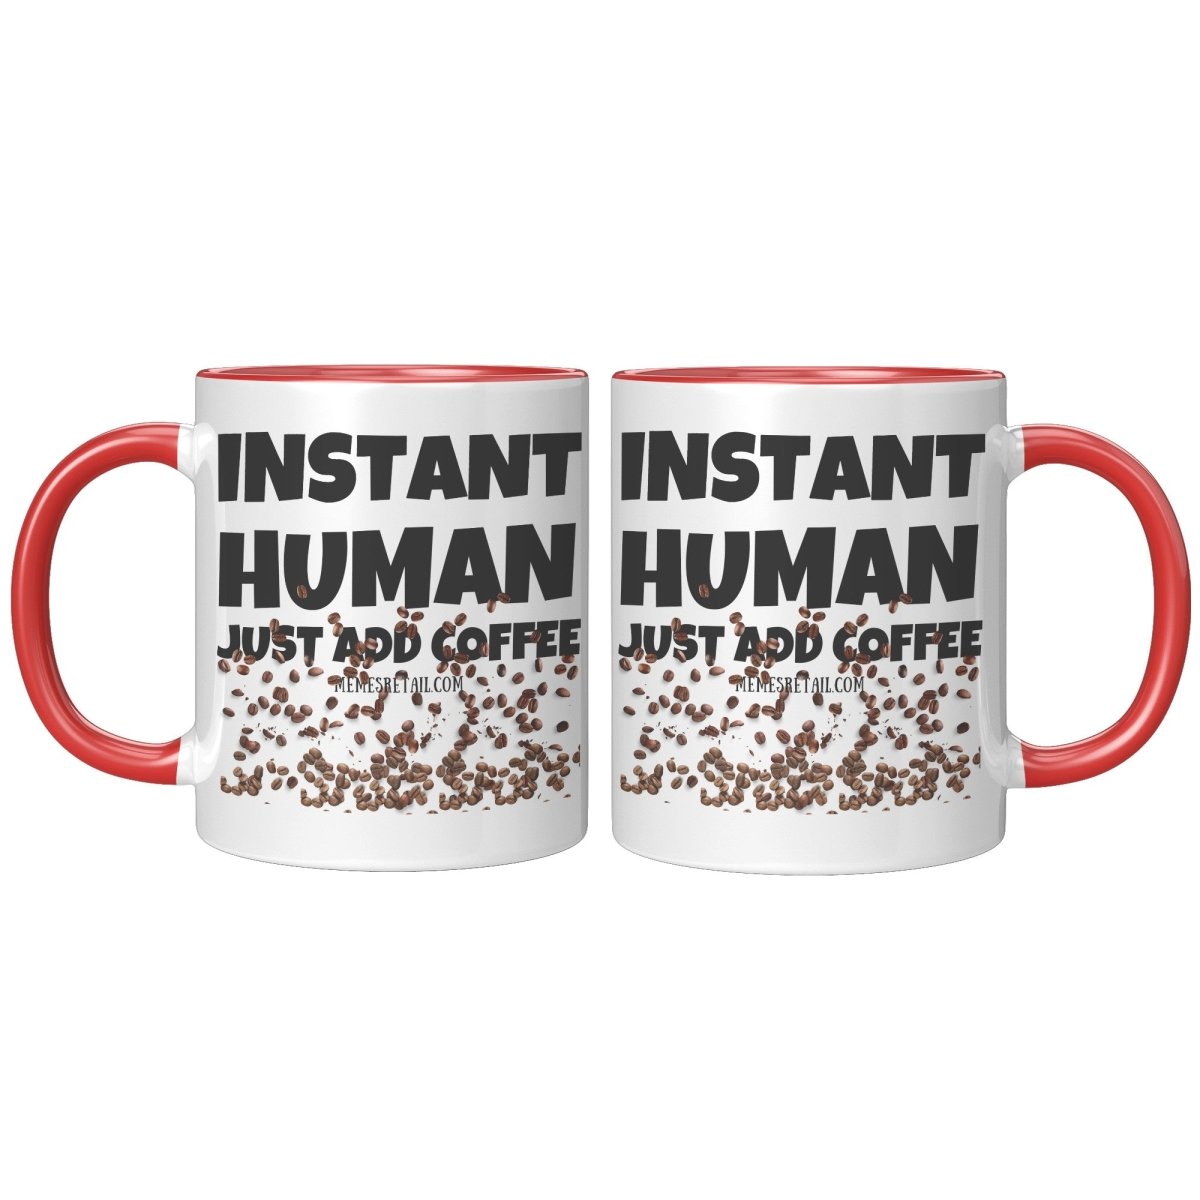 Instant Human, Just add Coffee 11oz and 15oz Ceramic Mugs - Memes Retail